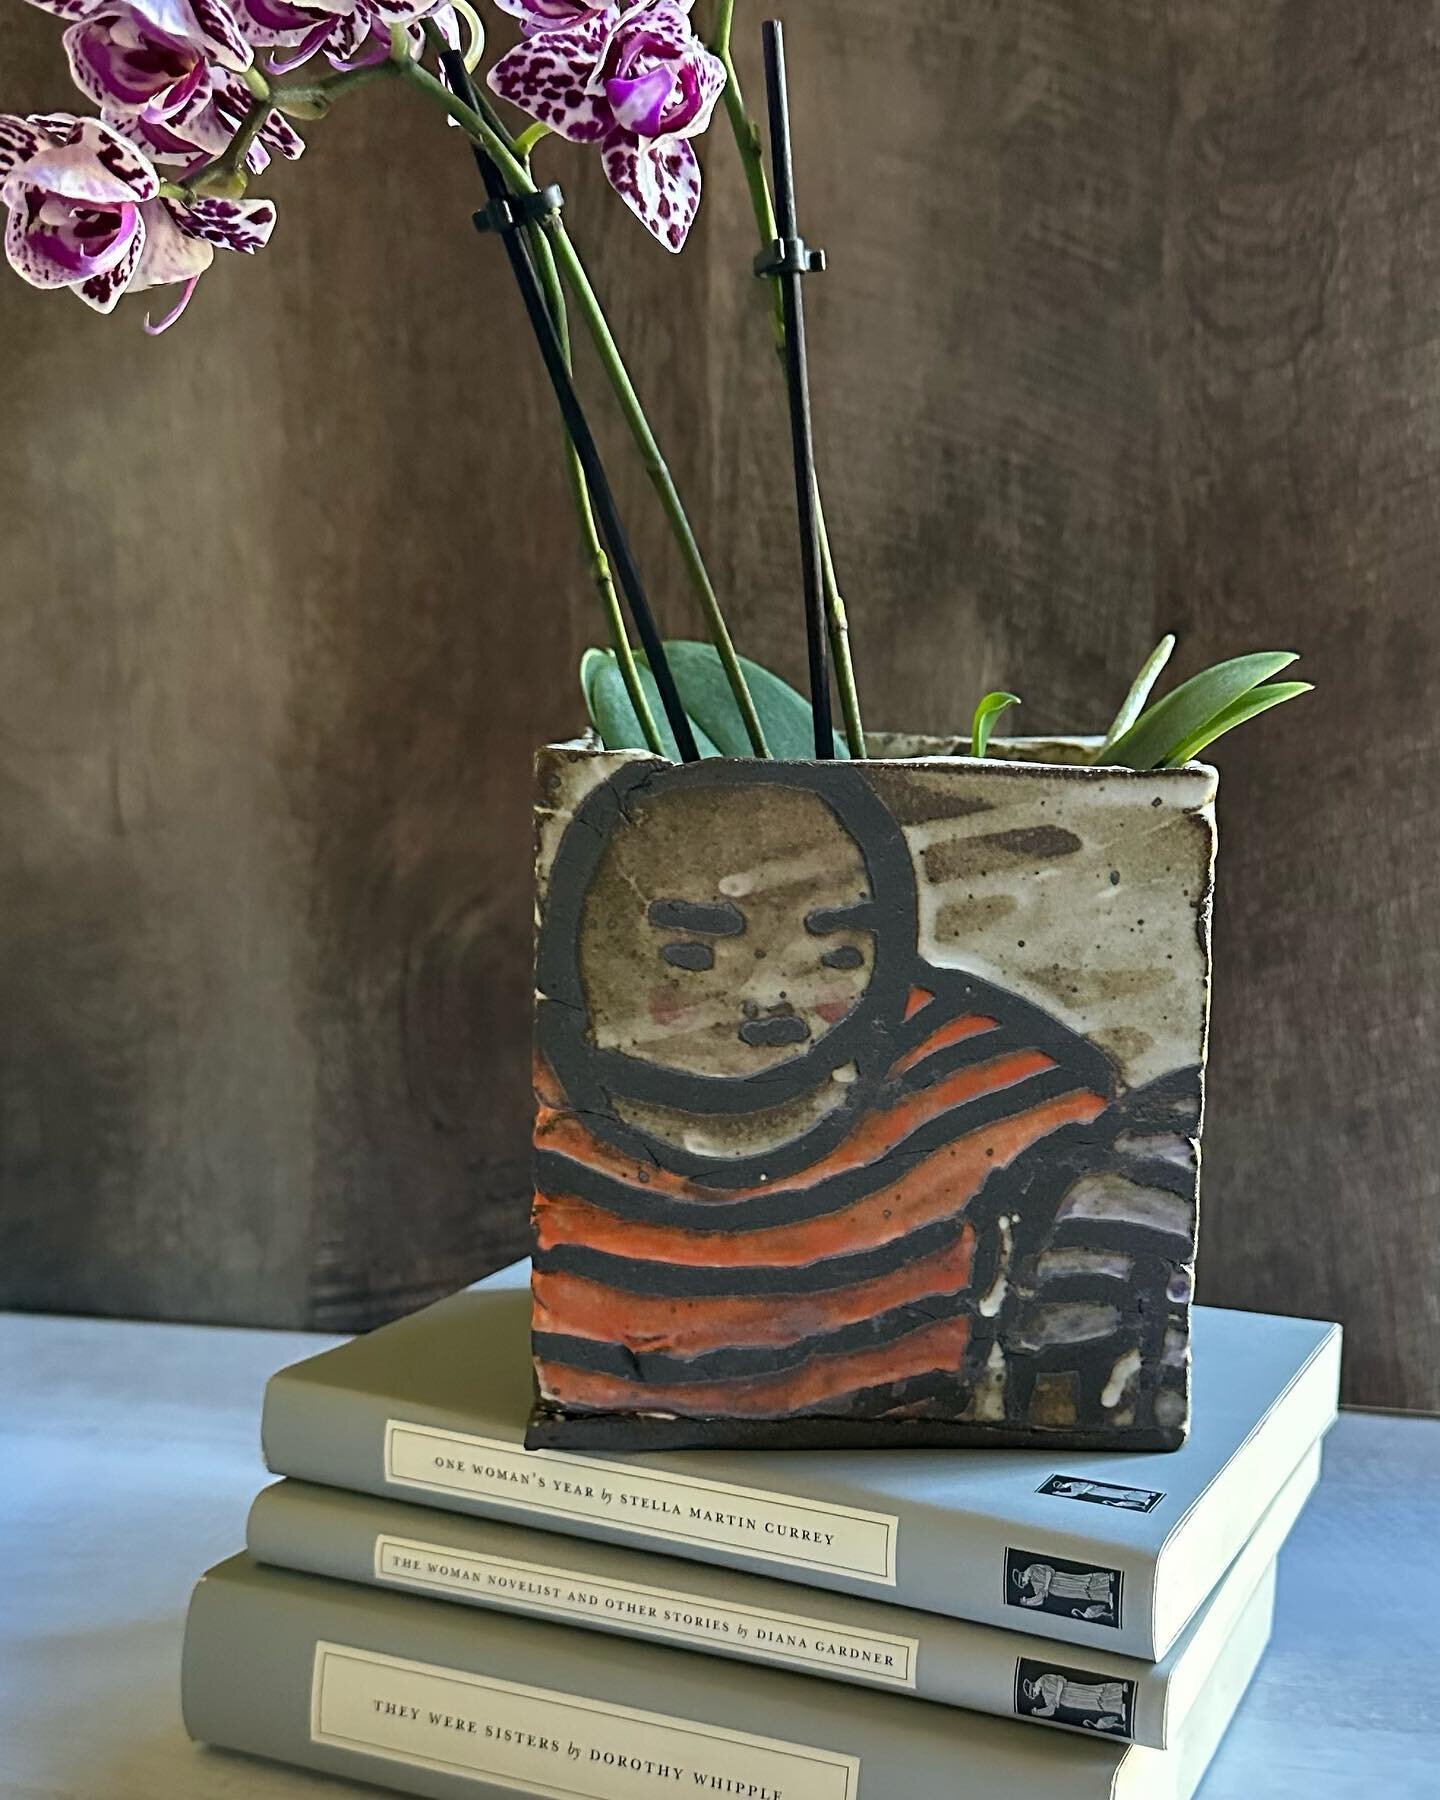 Stoneware planter box 🪴

.
.
.
.
.
#pottersofinstagram #ceramicartists #handbuiltpottery #elizabethcurrer #artforhome #underglazes #loveceramic #ceramics #interiordesign #pottery #contemporaryceramics #planters #houseplants #contemporarycraft #ceram